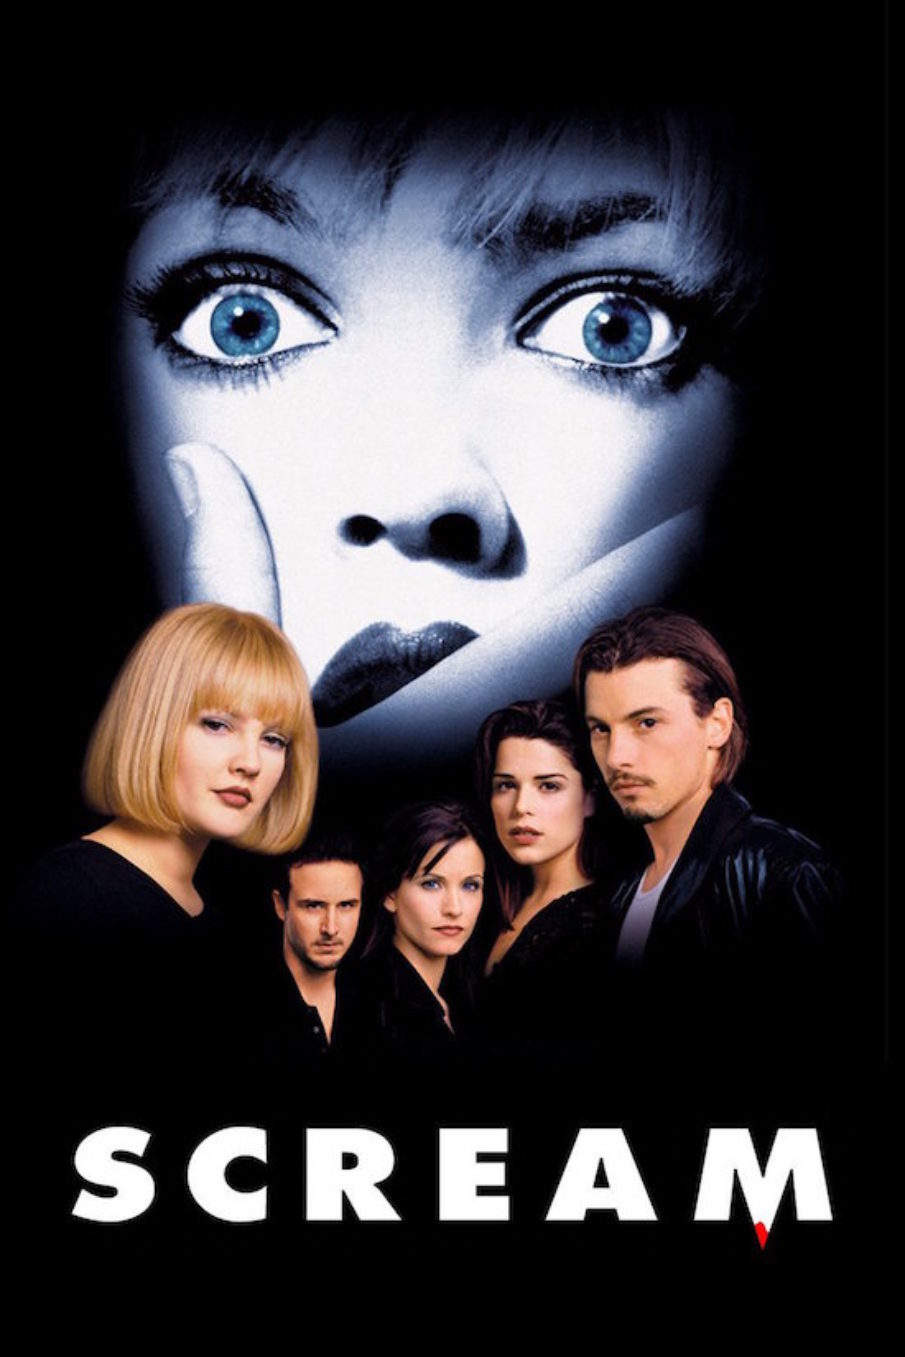 Scream (1996) – 31 Days of Halloween